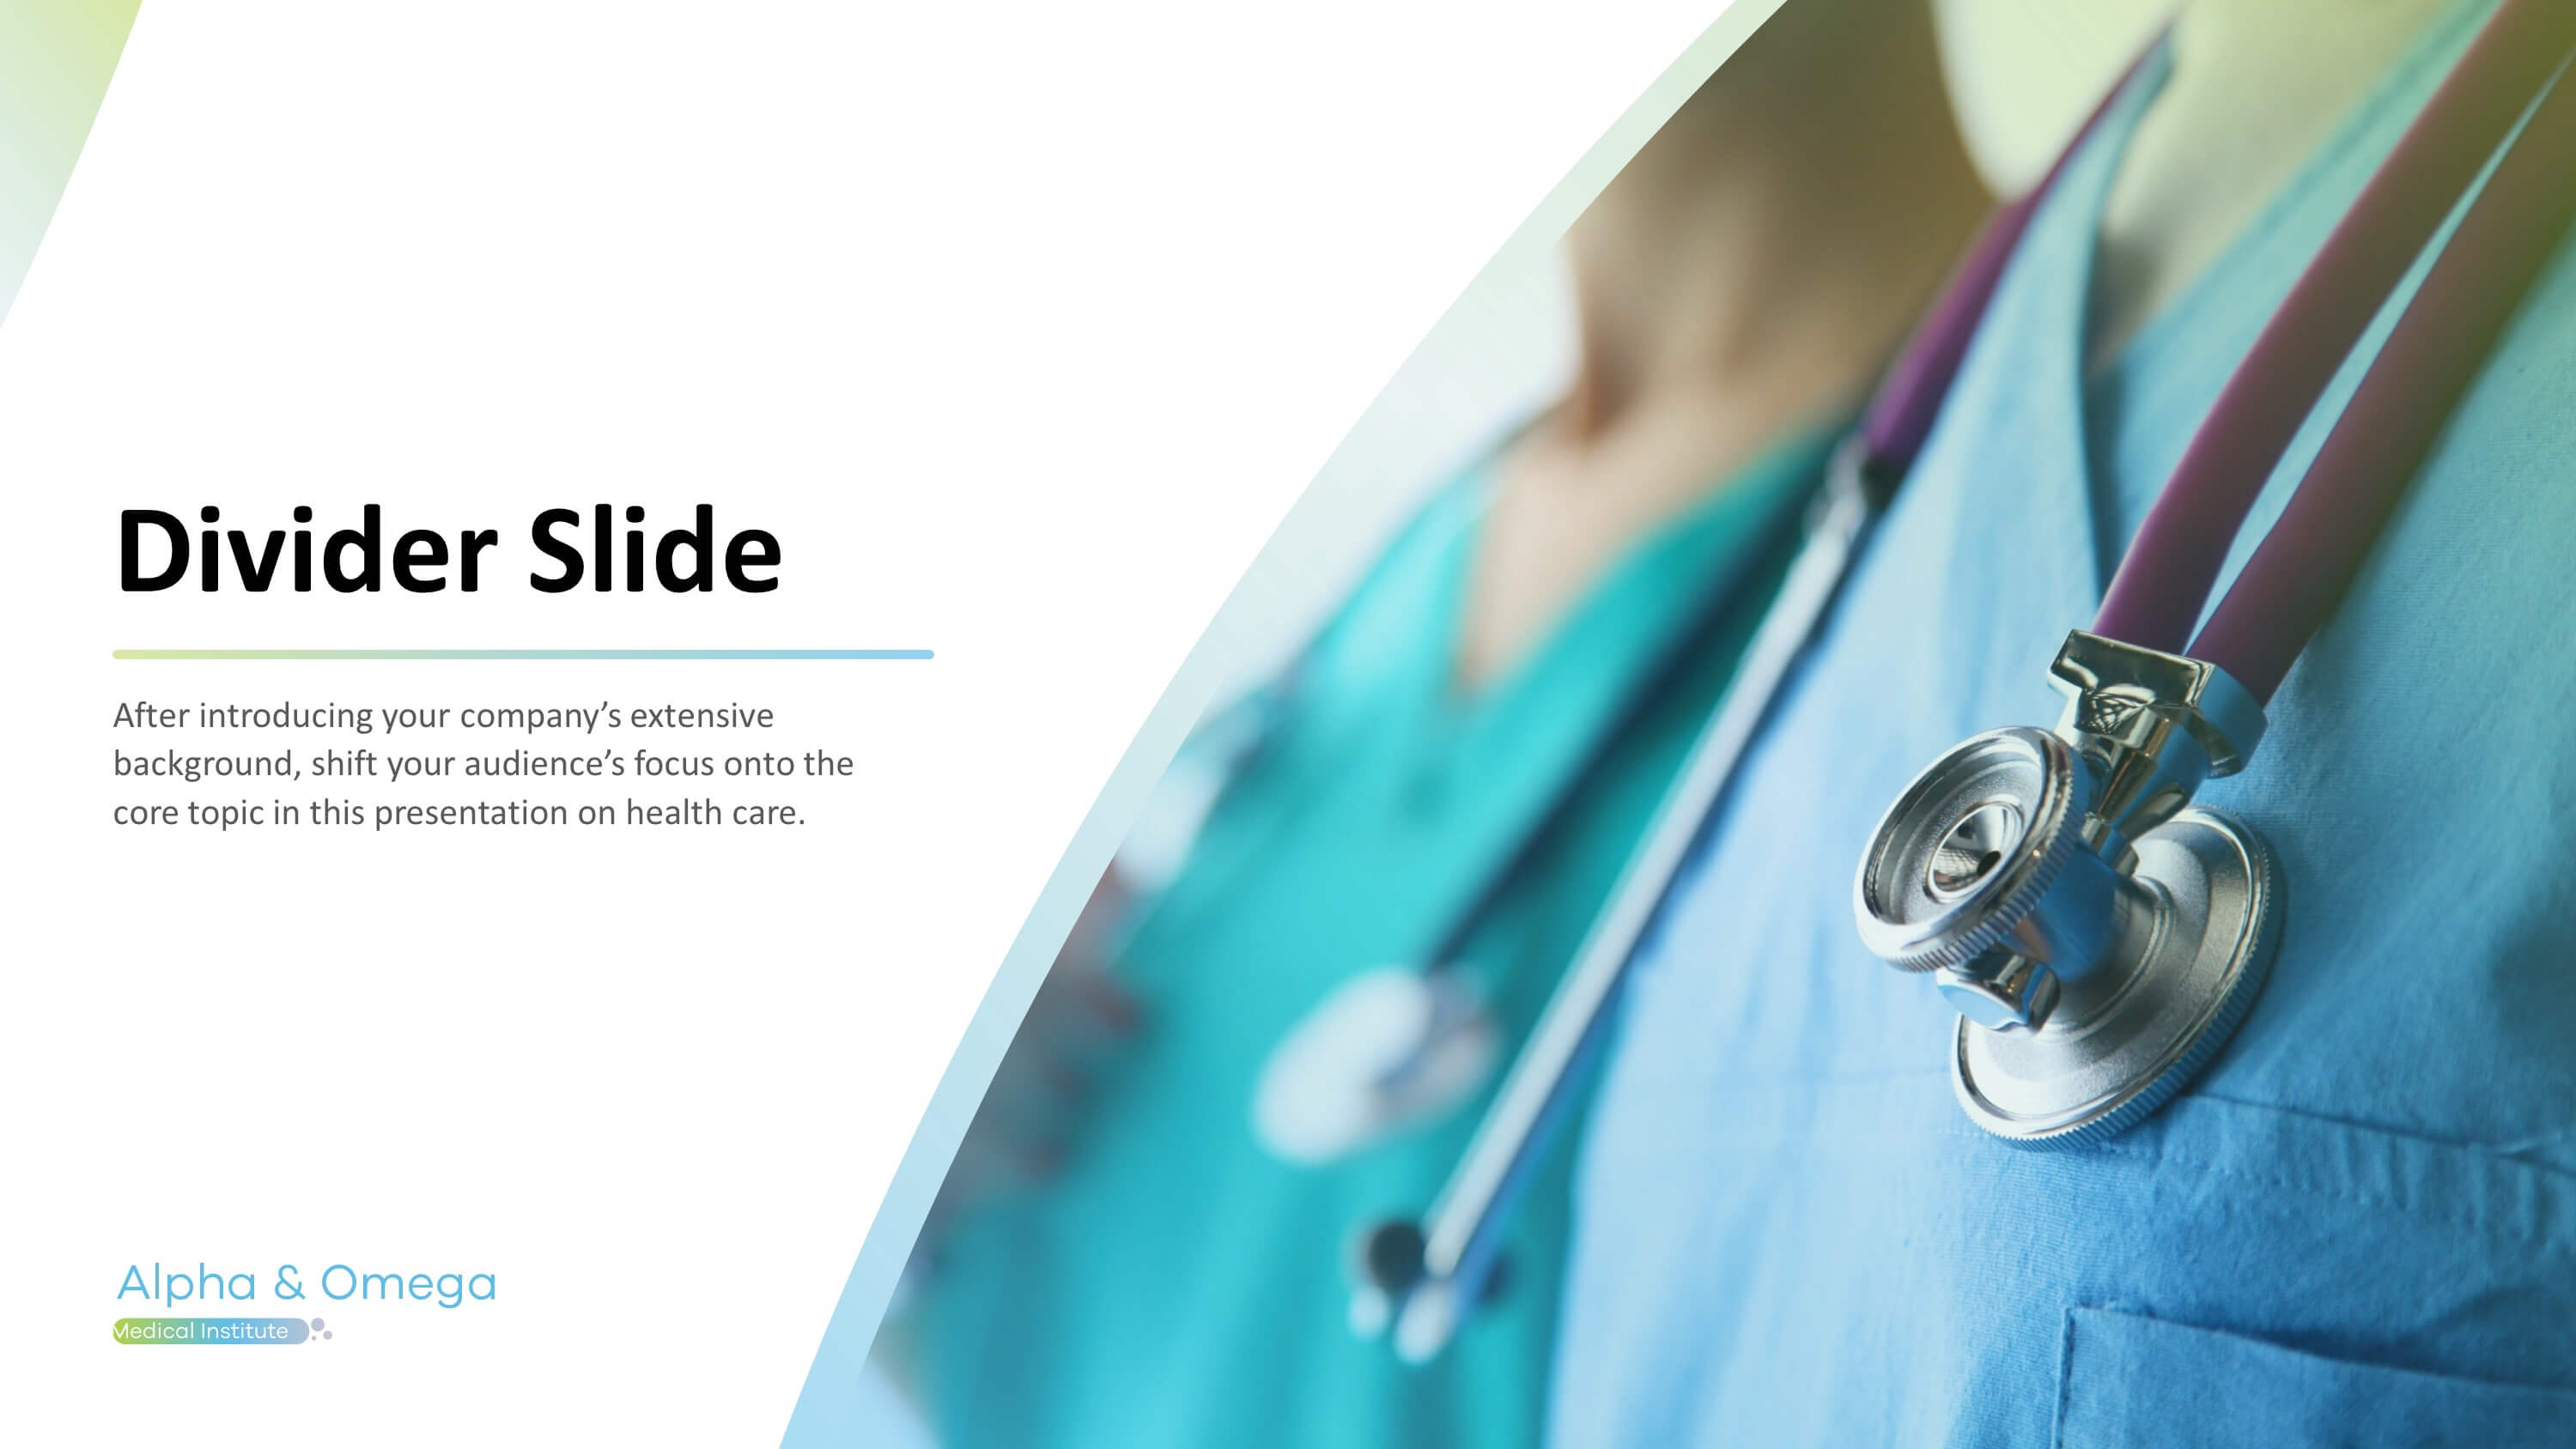 Nursing Diagnosis Premium Powerpoint Template - Slidestore With Regard To Free Nursing Powerpoint Templates